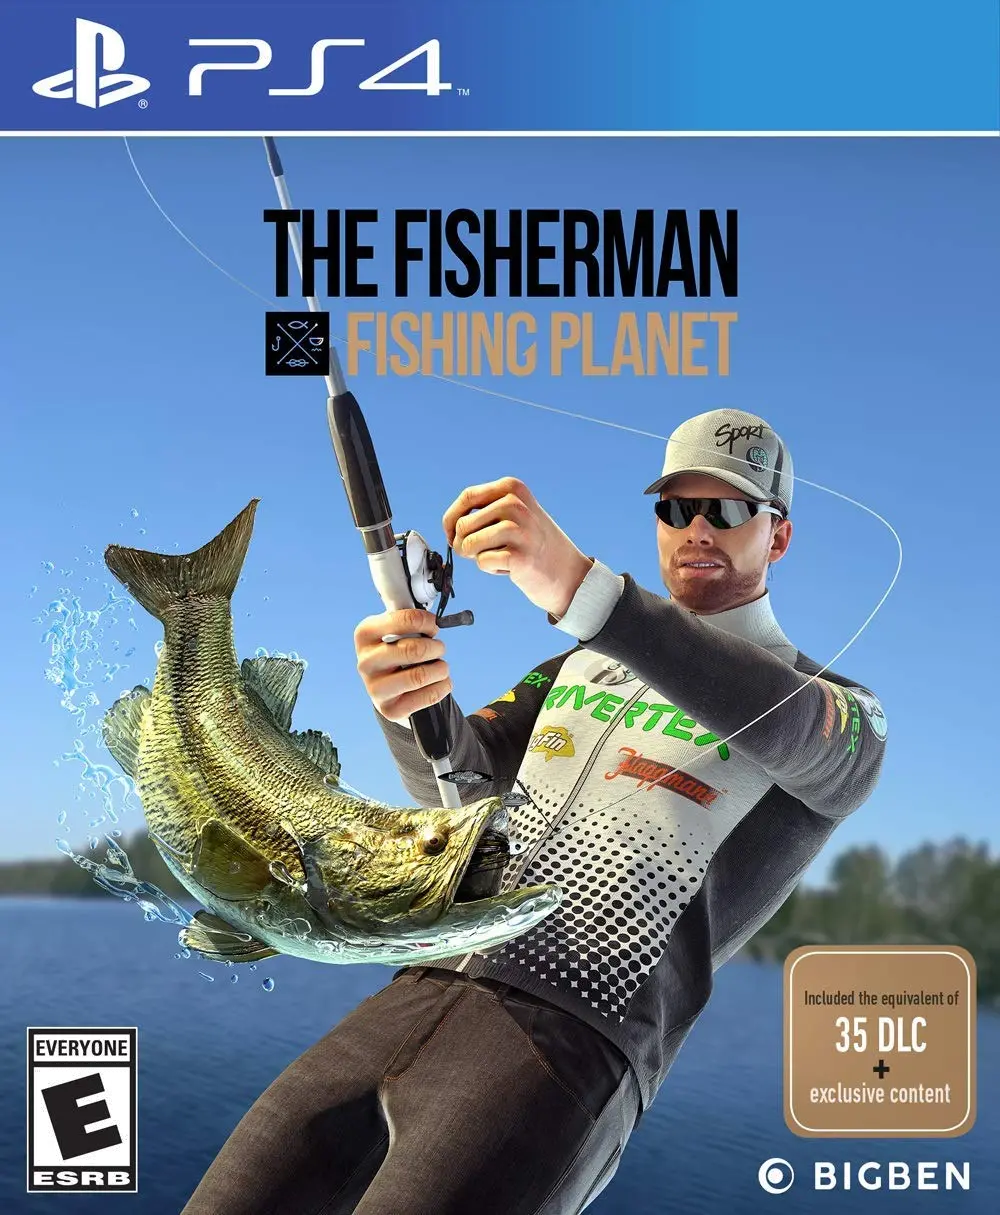 PS4/FISHERMAN_PLANET The Fisherman: Fishing Planet-1